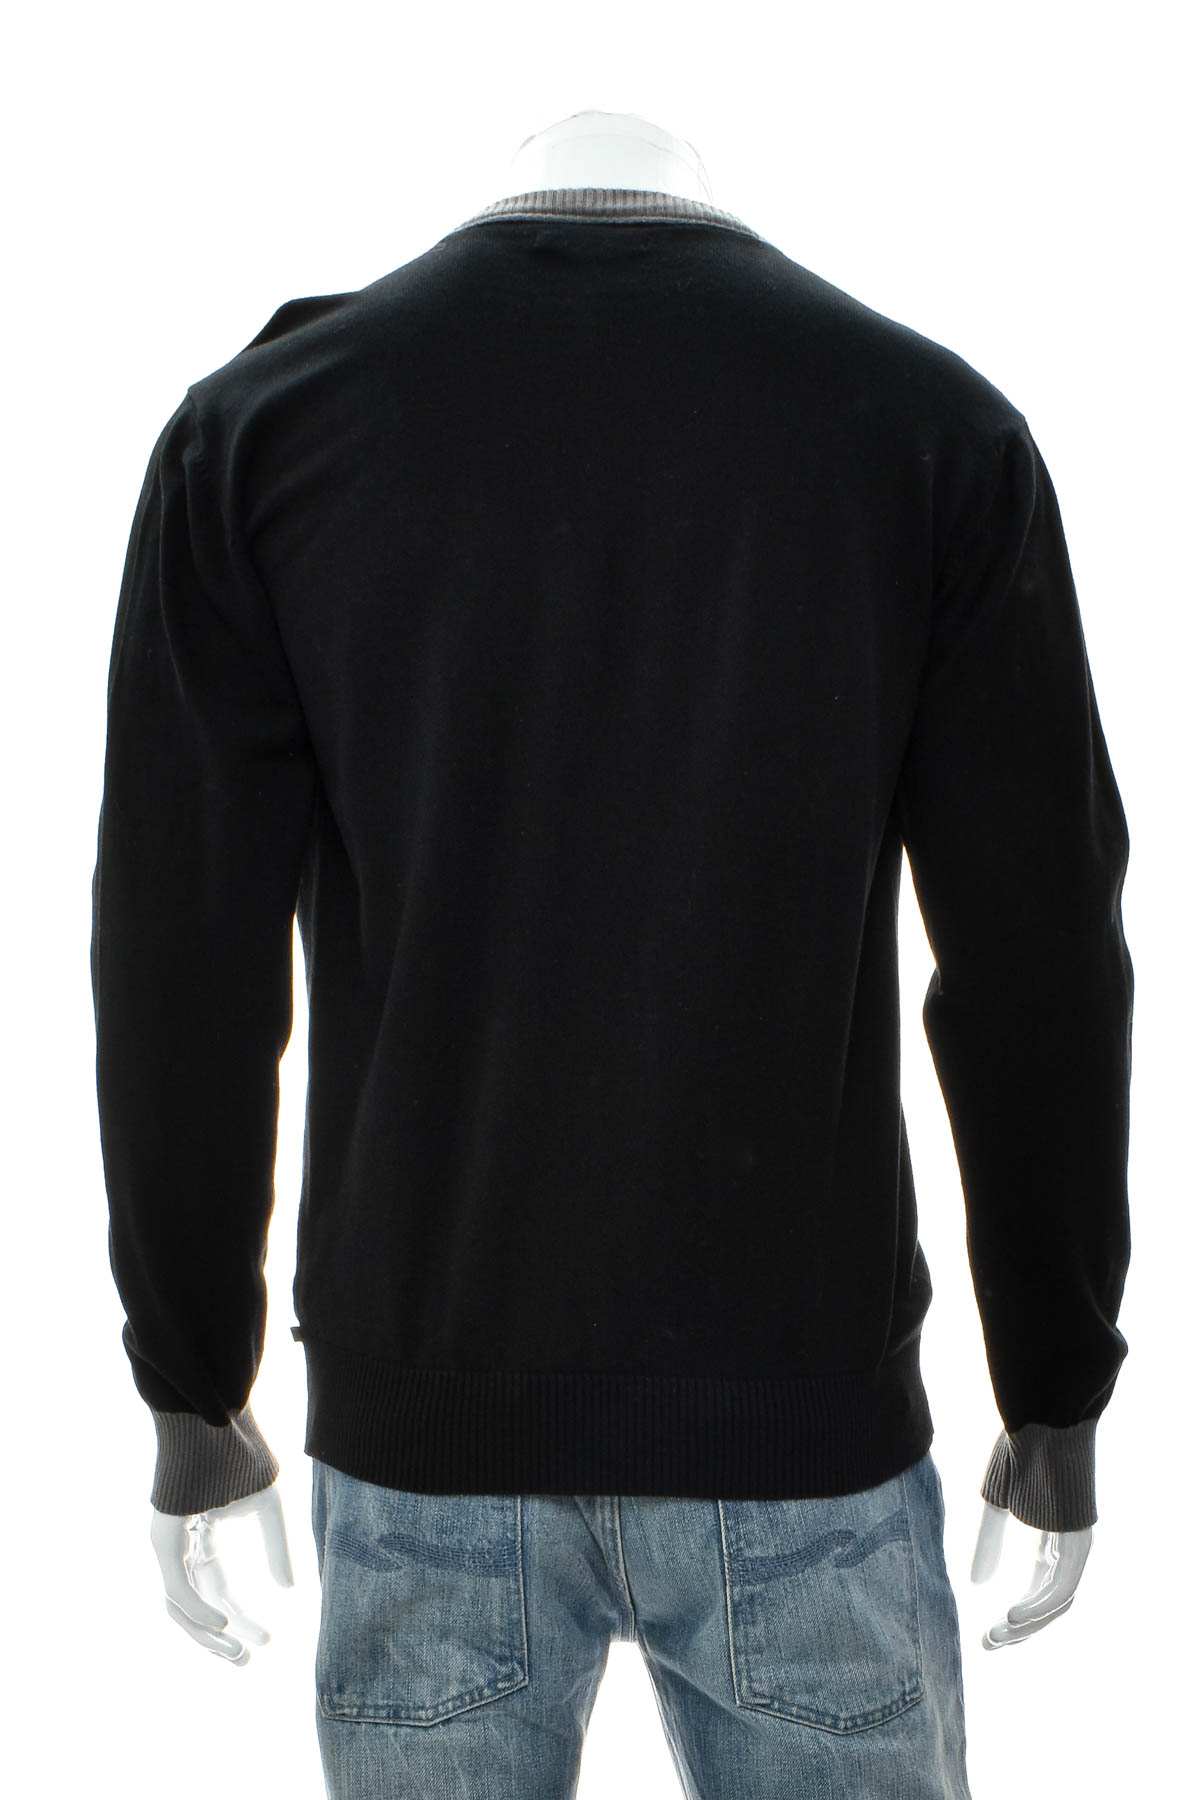 Men's sweater - Blend - 1